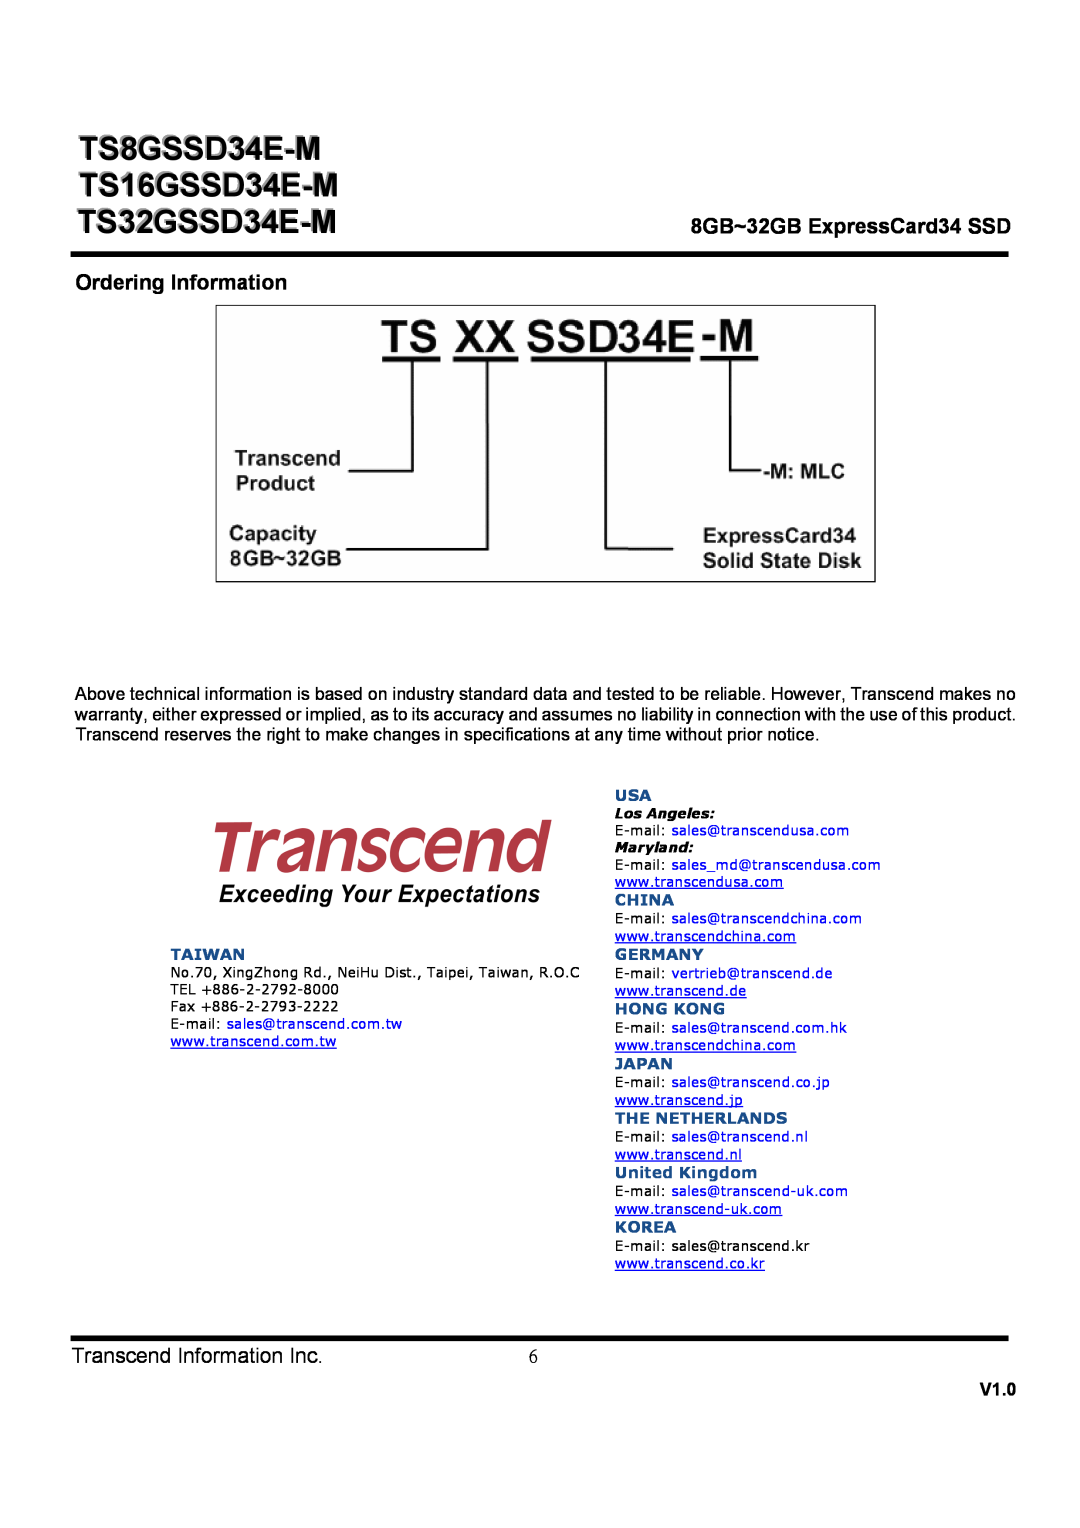 Transcend Information TS32GSSD34E-M dimensions Ordering Information, TS8GSSD34E-M TS16GSSD34E-M, Transcend Information Inc 